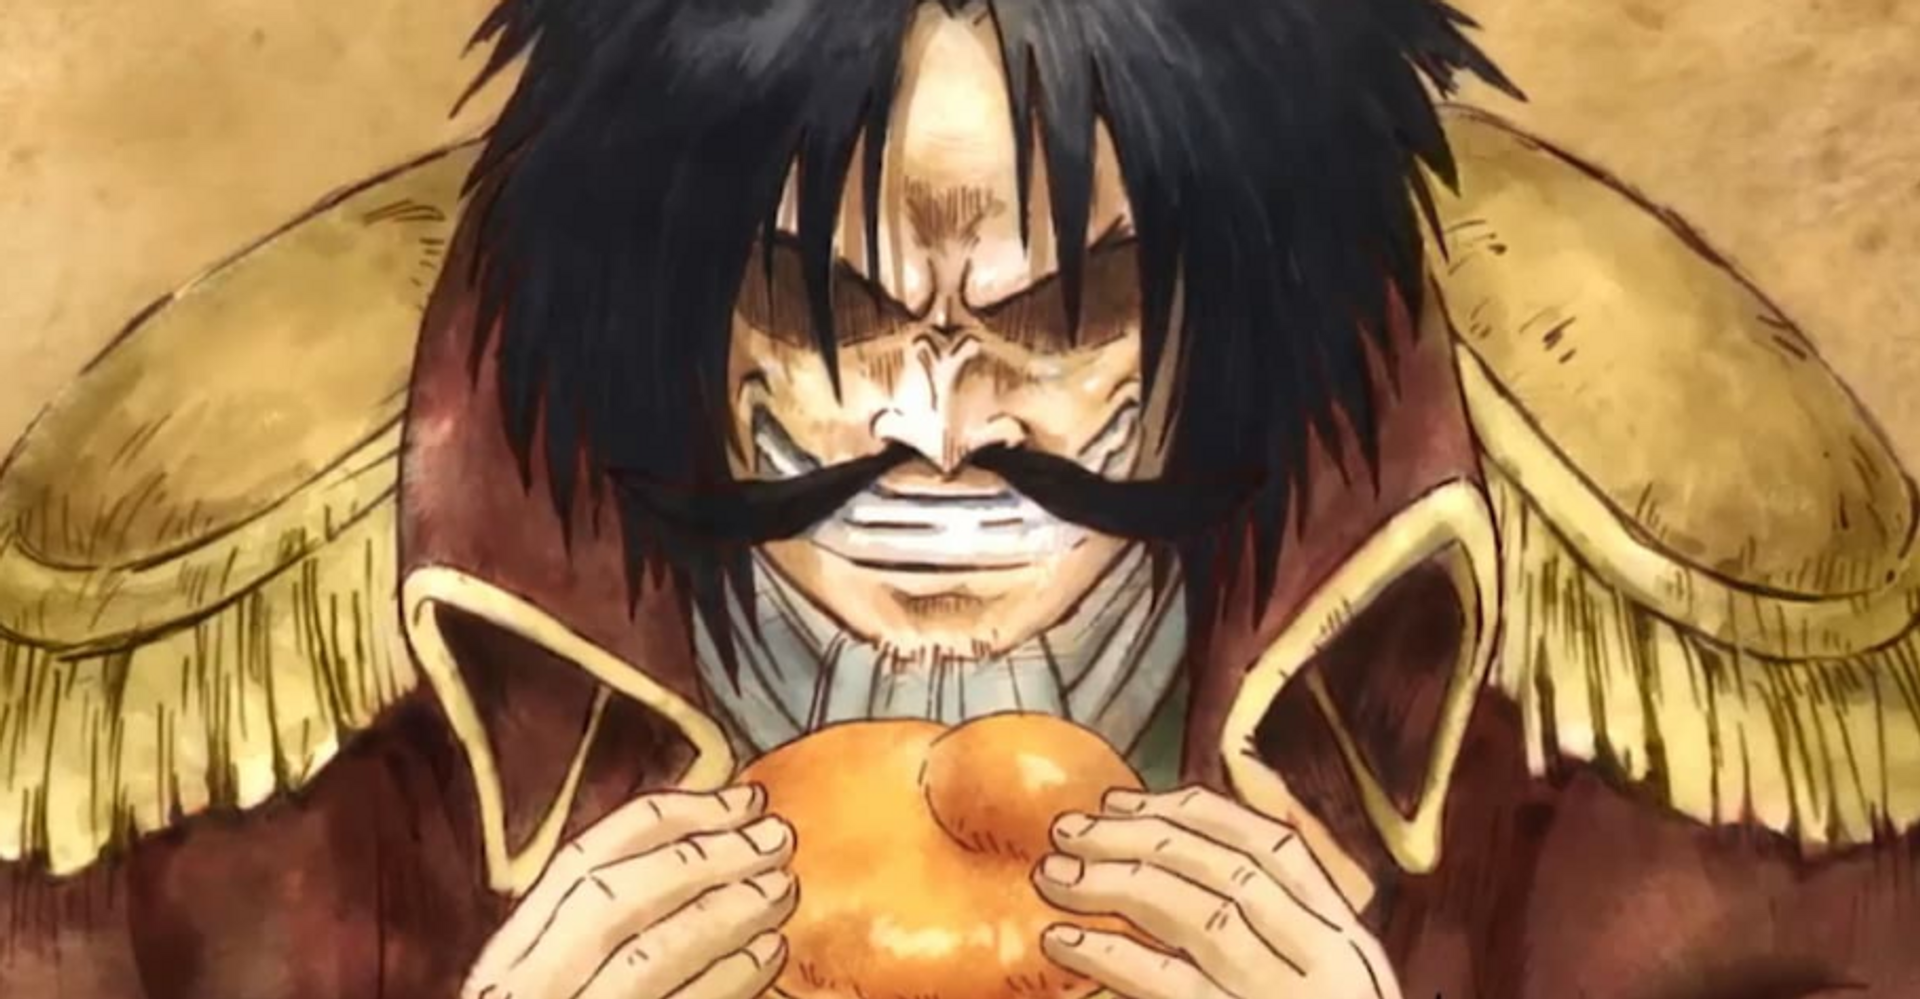 McDonald's embeds itself into One Piece anime lore